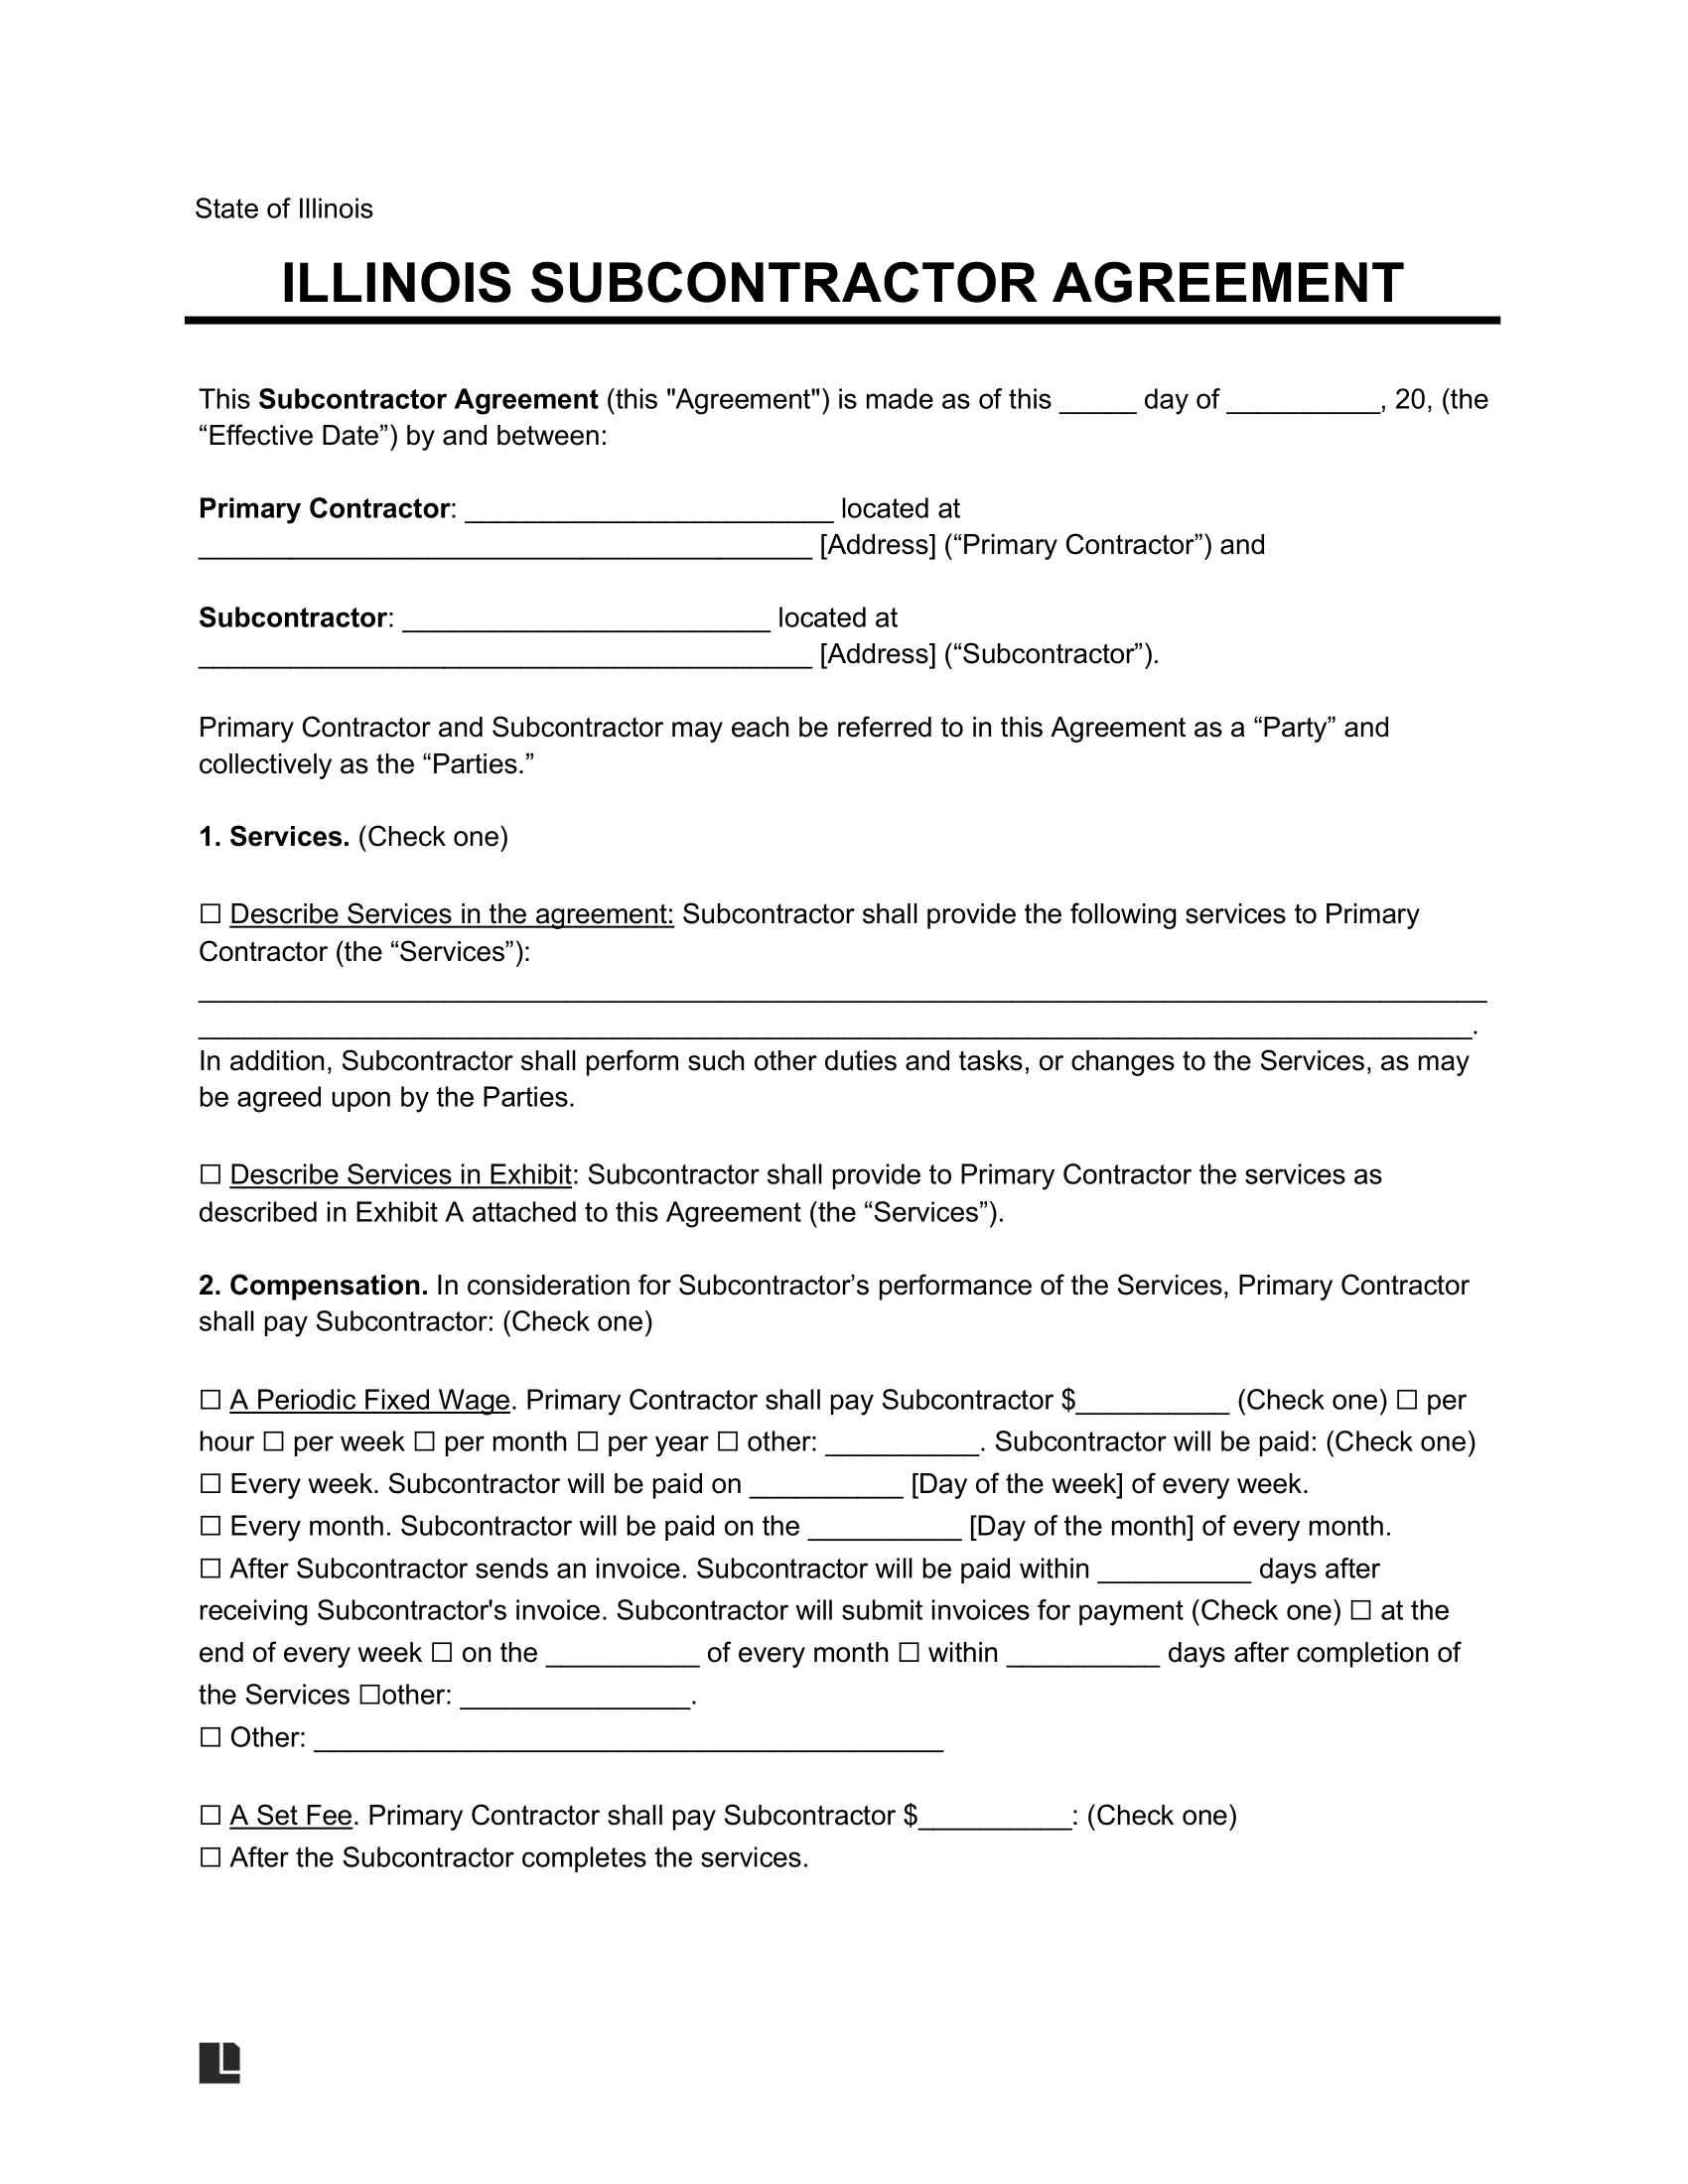 illinois subcontractor agreement template